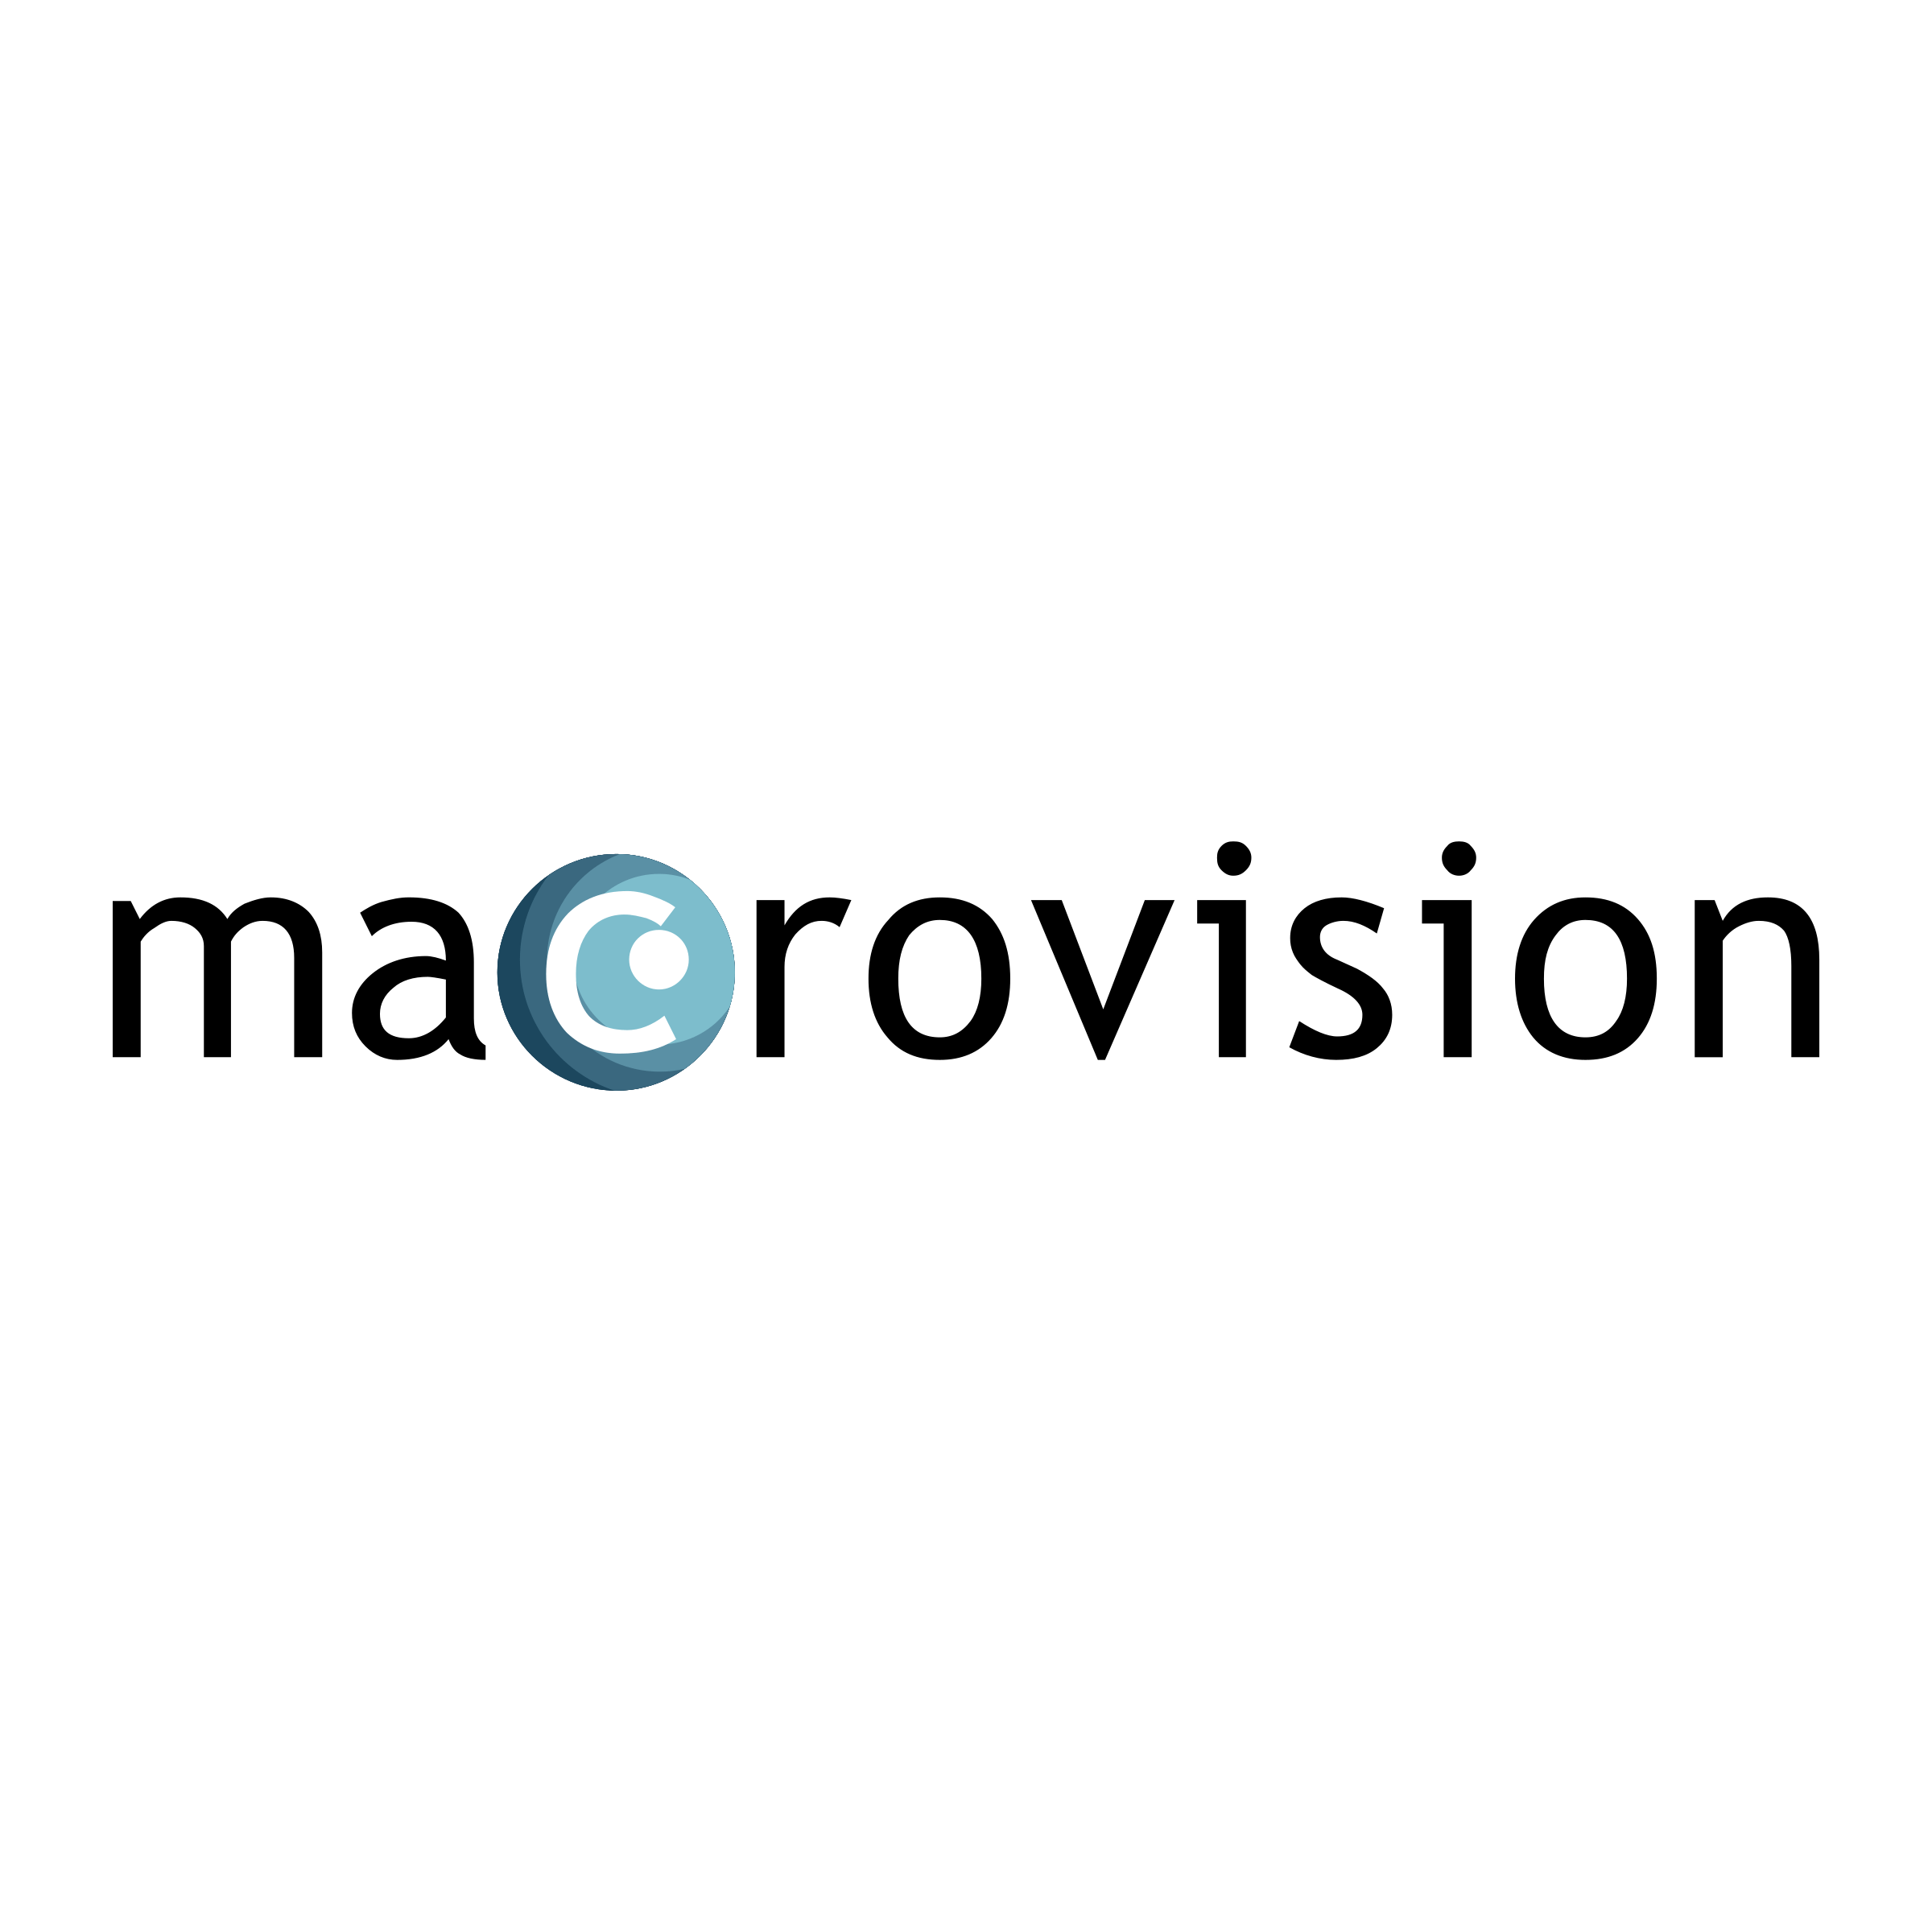 Macrovision Logo - Macrovision Logo PNG Transparent & SVG Vector - Freebie Supply